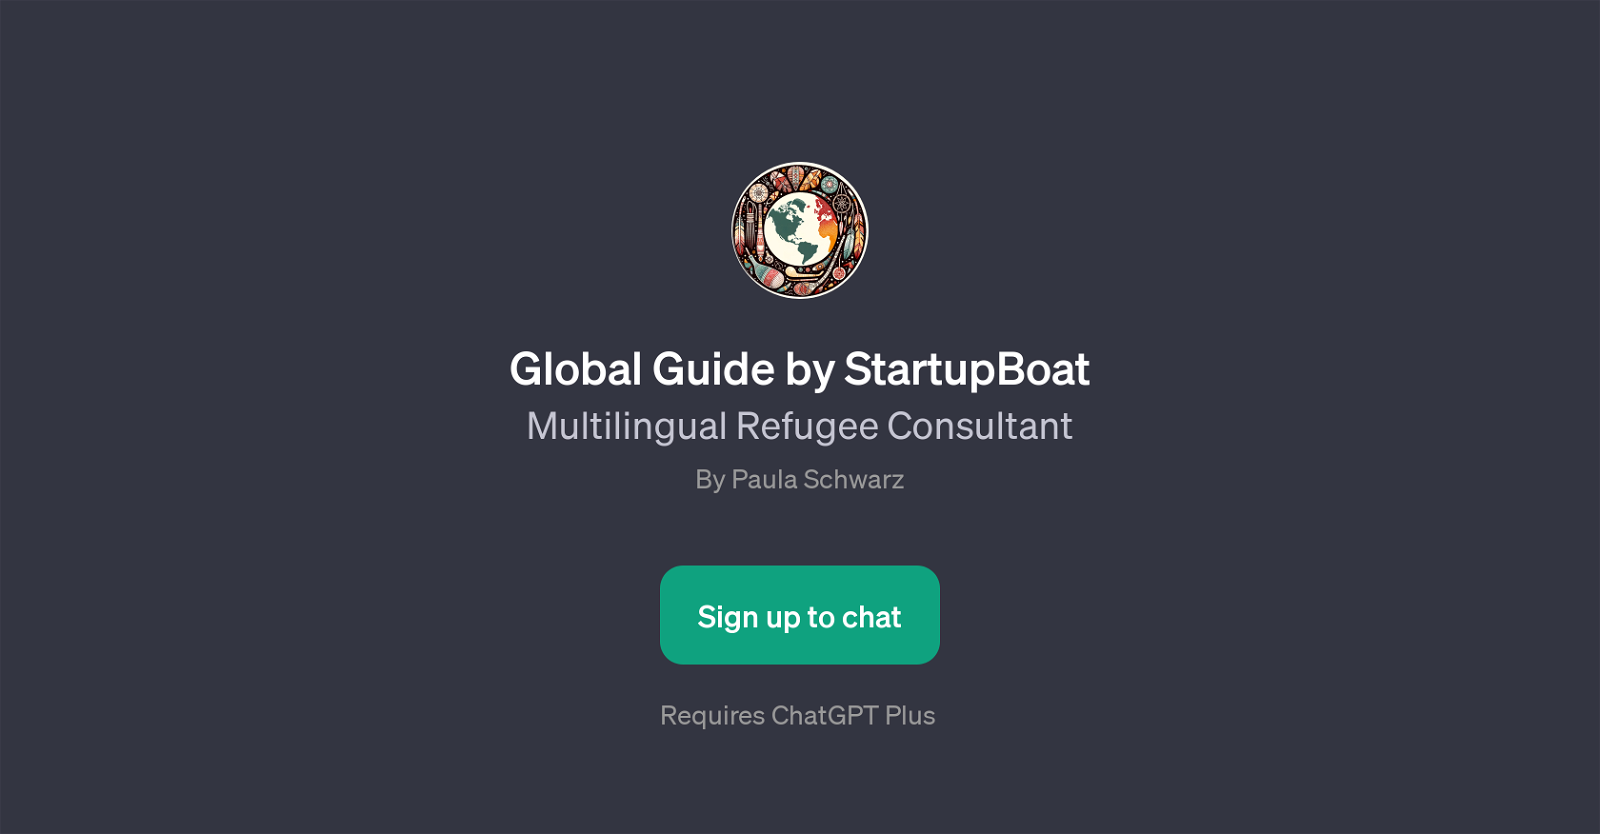 Global Guide by StartupBoat website